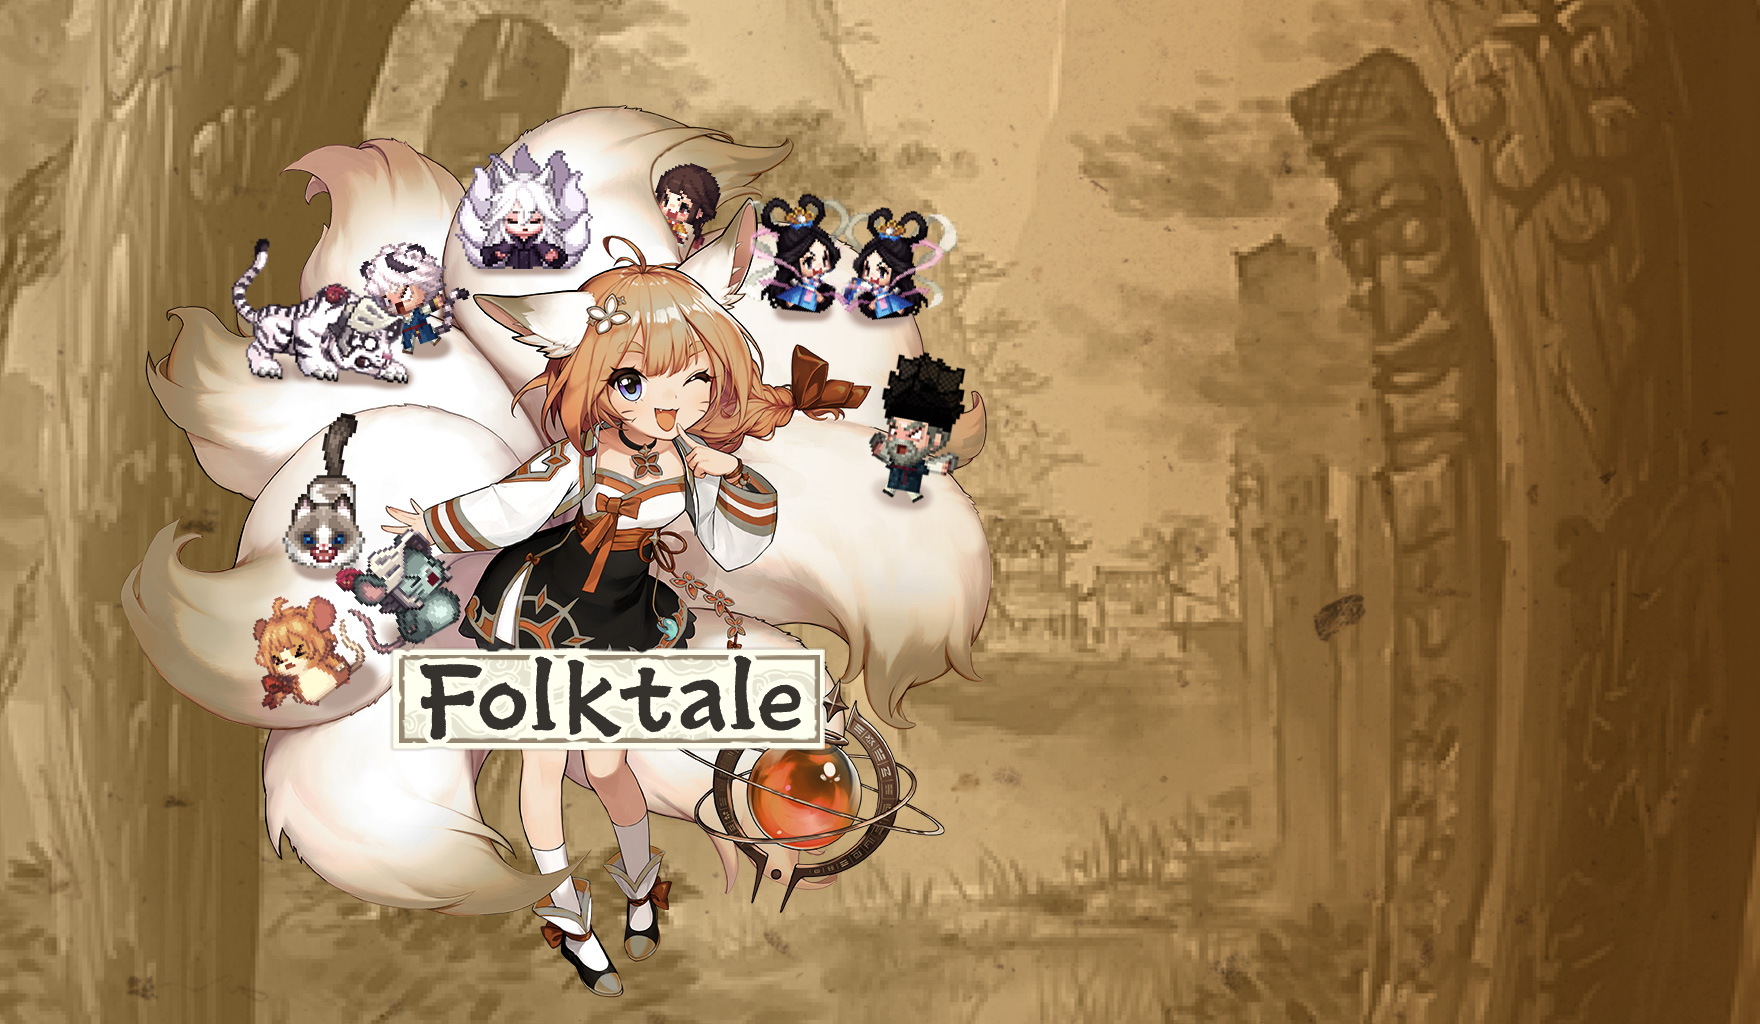 Guardian Tales - Nari, Nari, little Nari! 🦊 Folktale is back